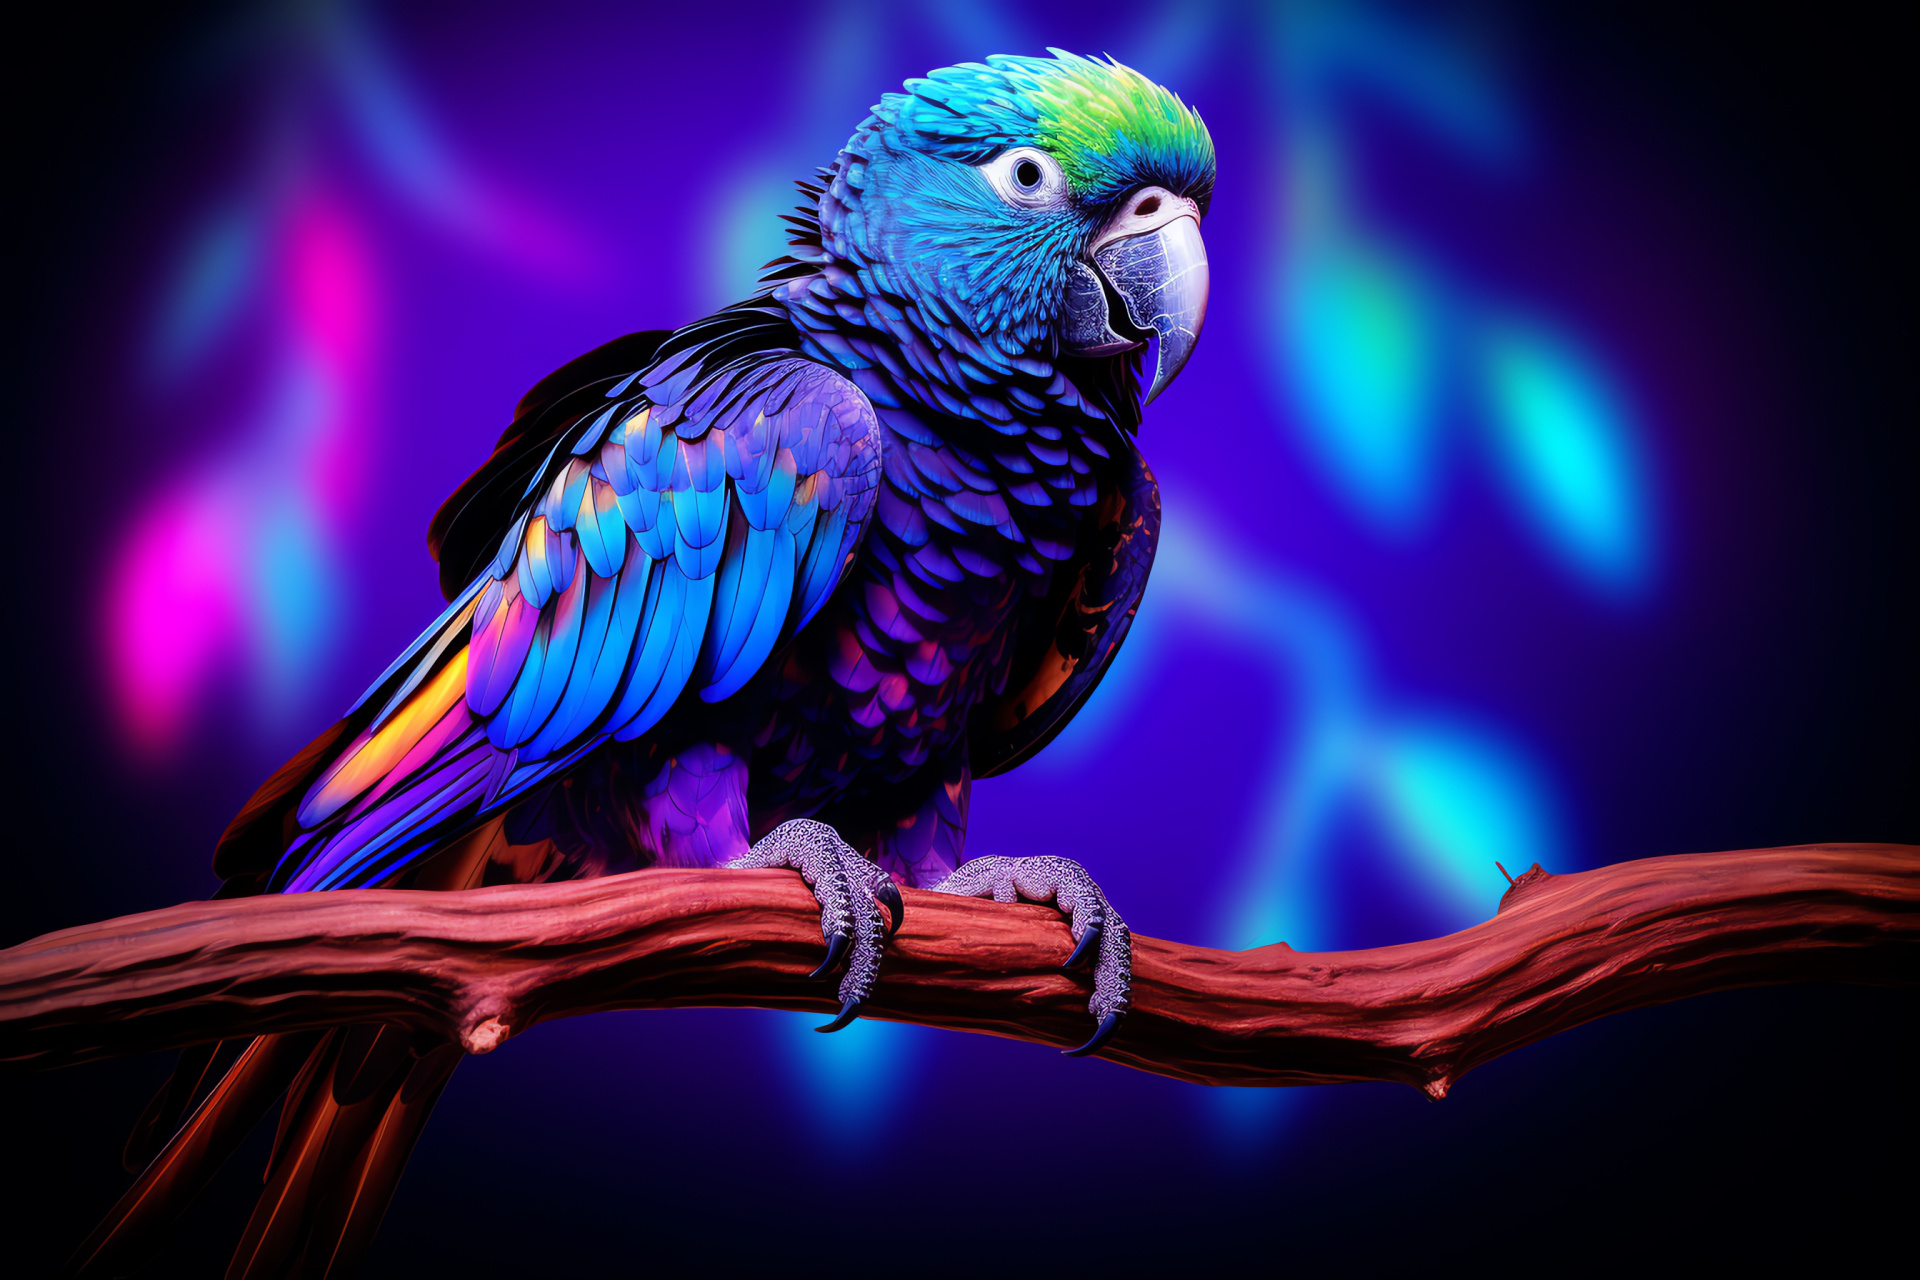 Parrot, purple plumage, tree branch, visual contrast, serene background, HD Desktop Wallpaper